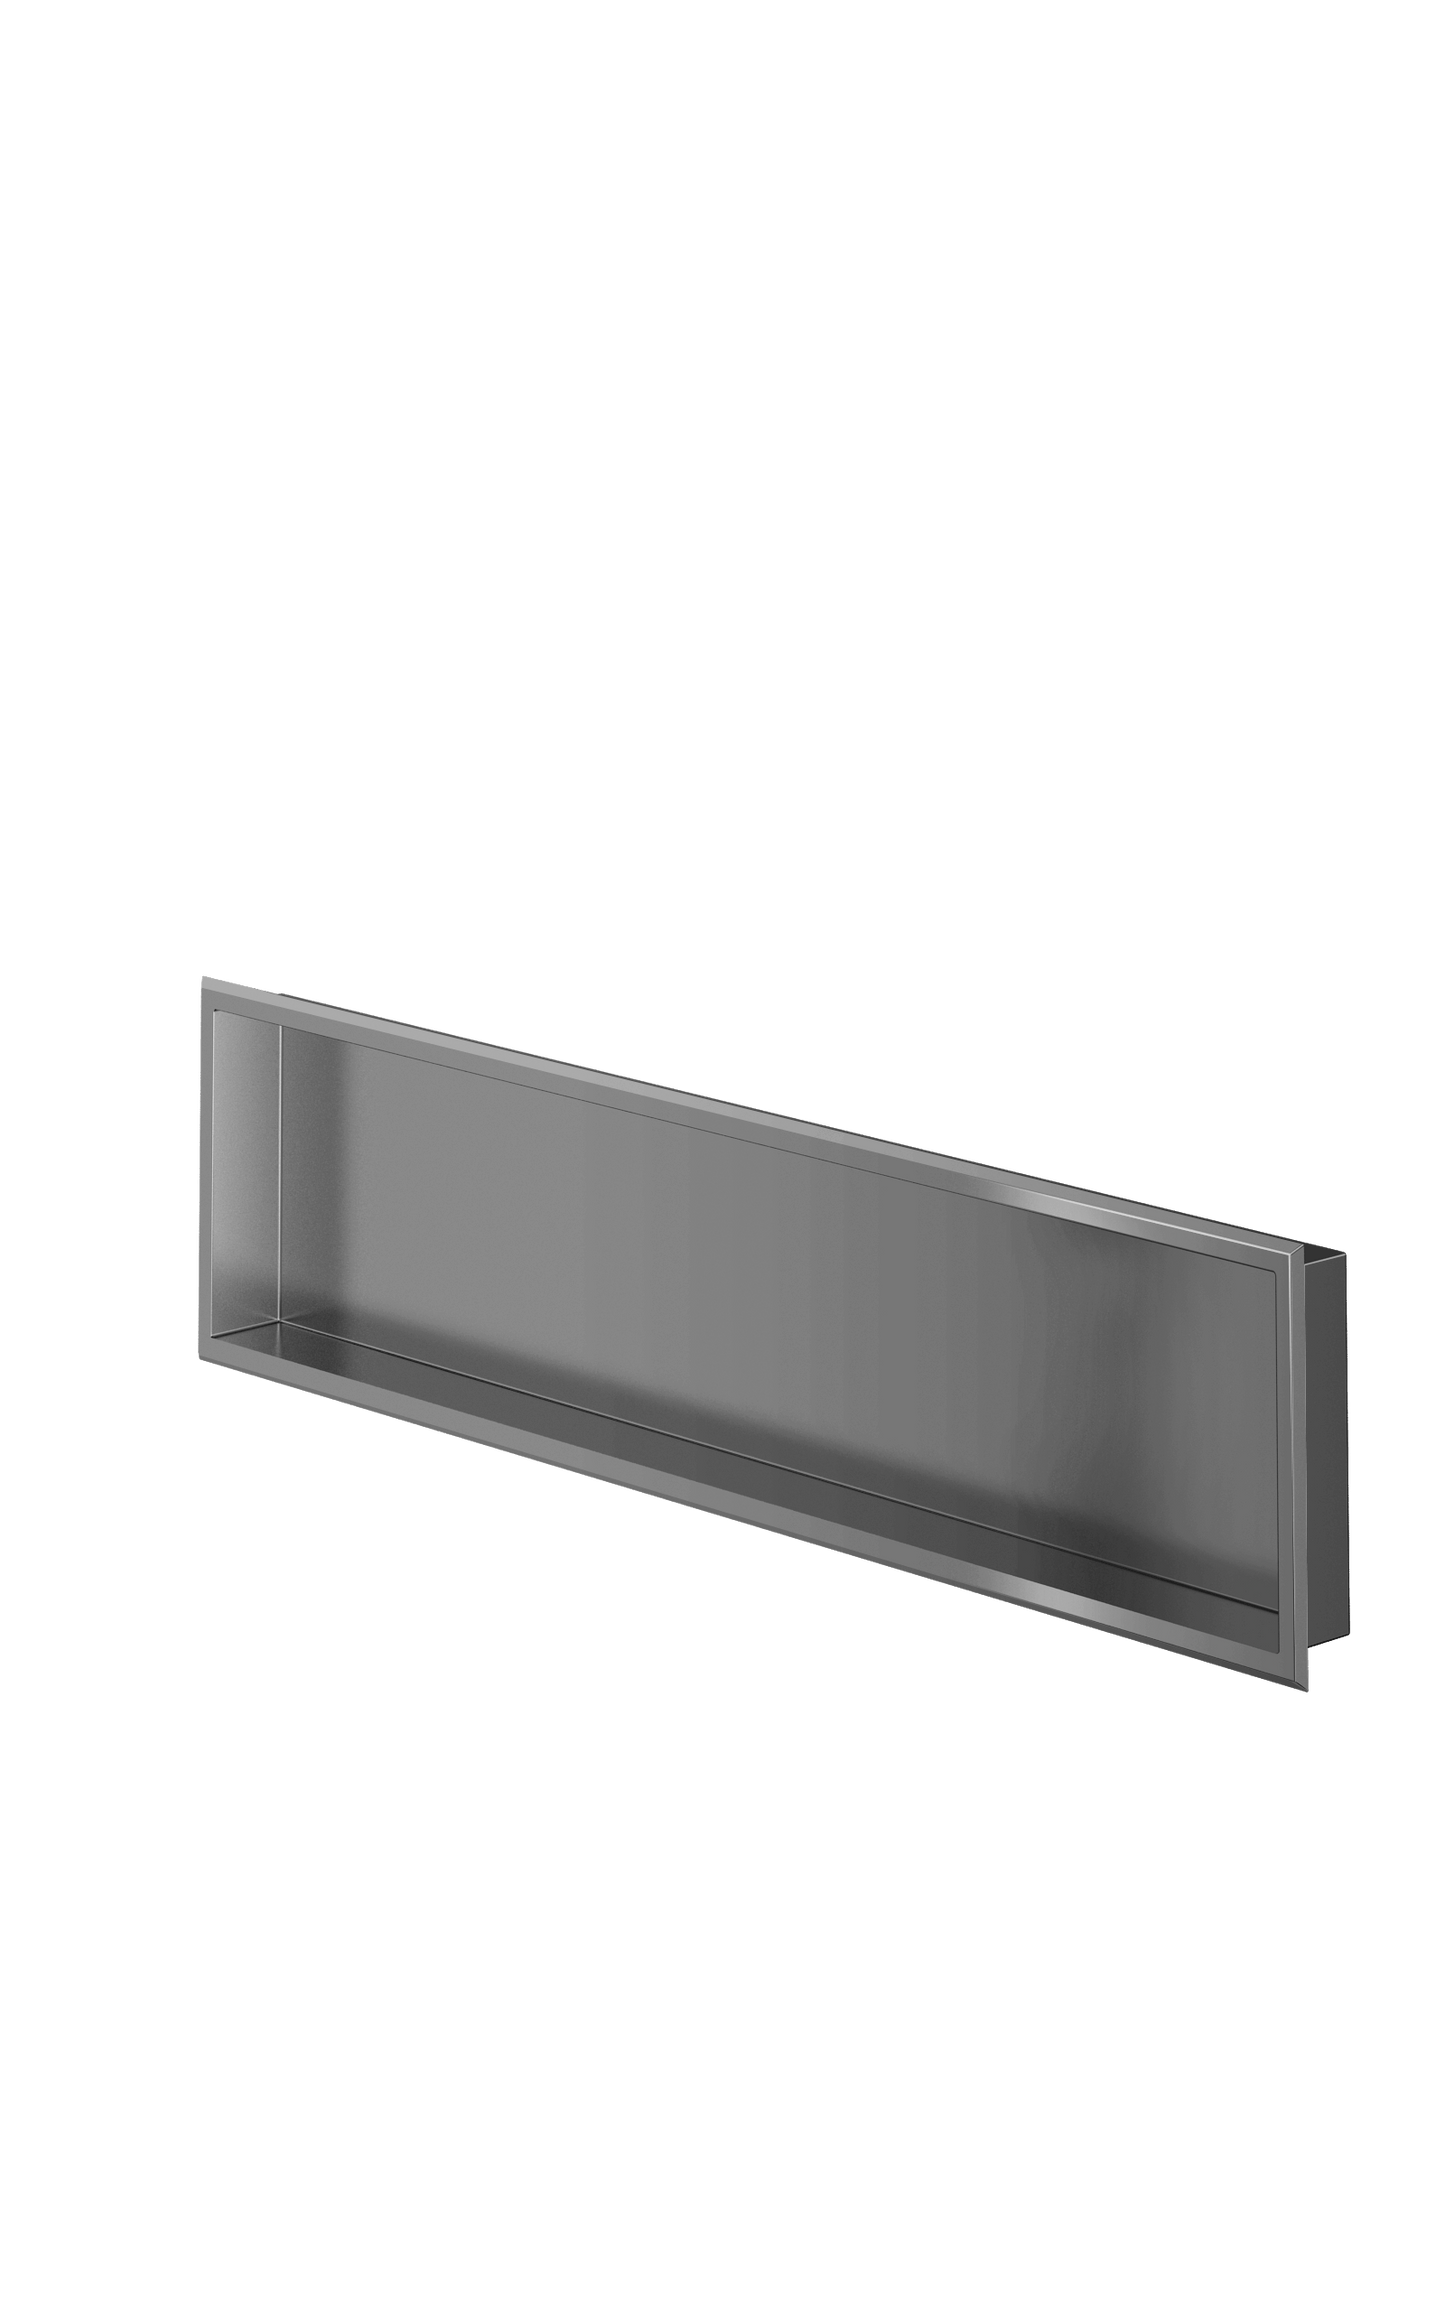 Zitta Stainless Steel Niche 48" x 12" x 3" (1219mm X 305mm X 76mm) - Renoz